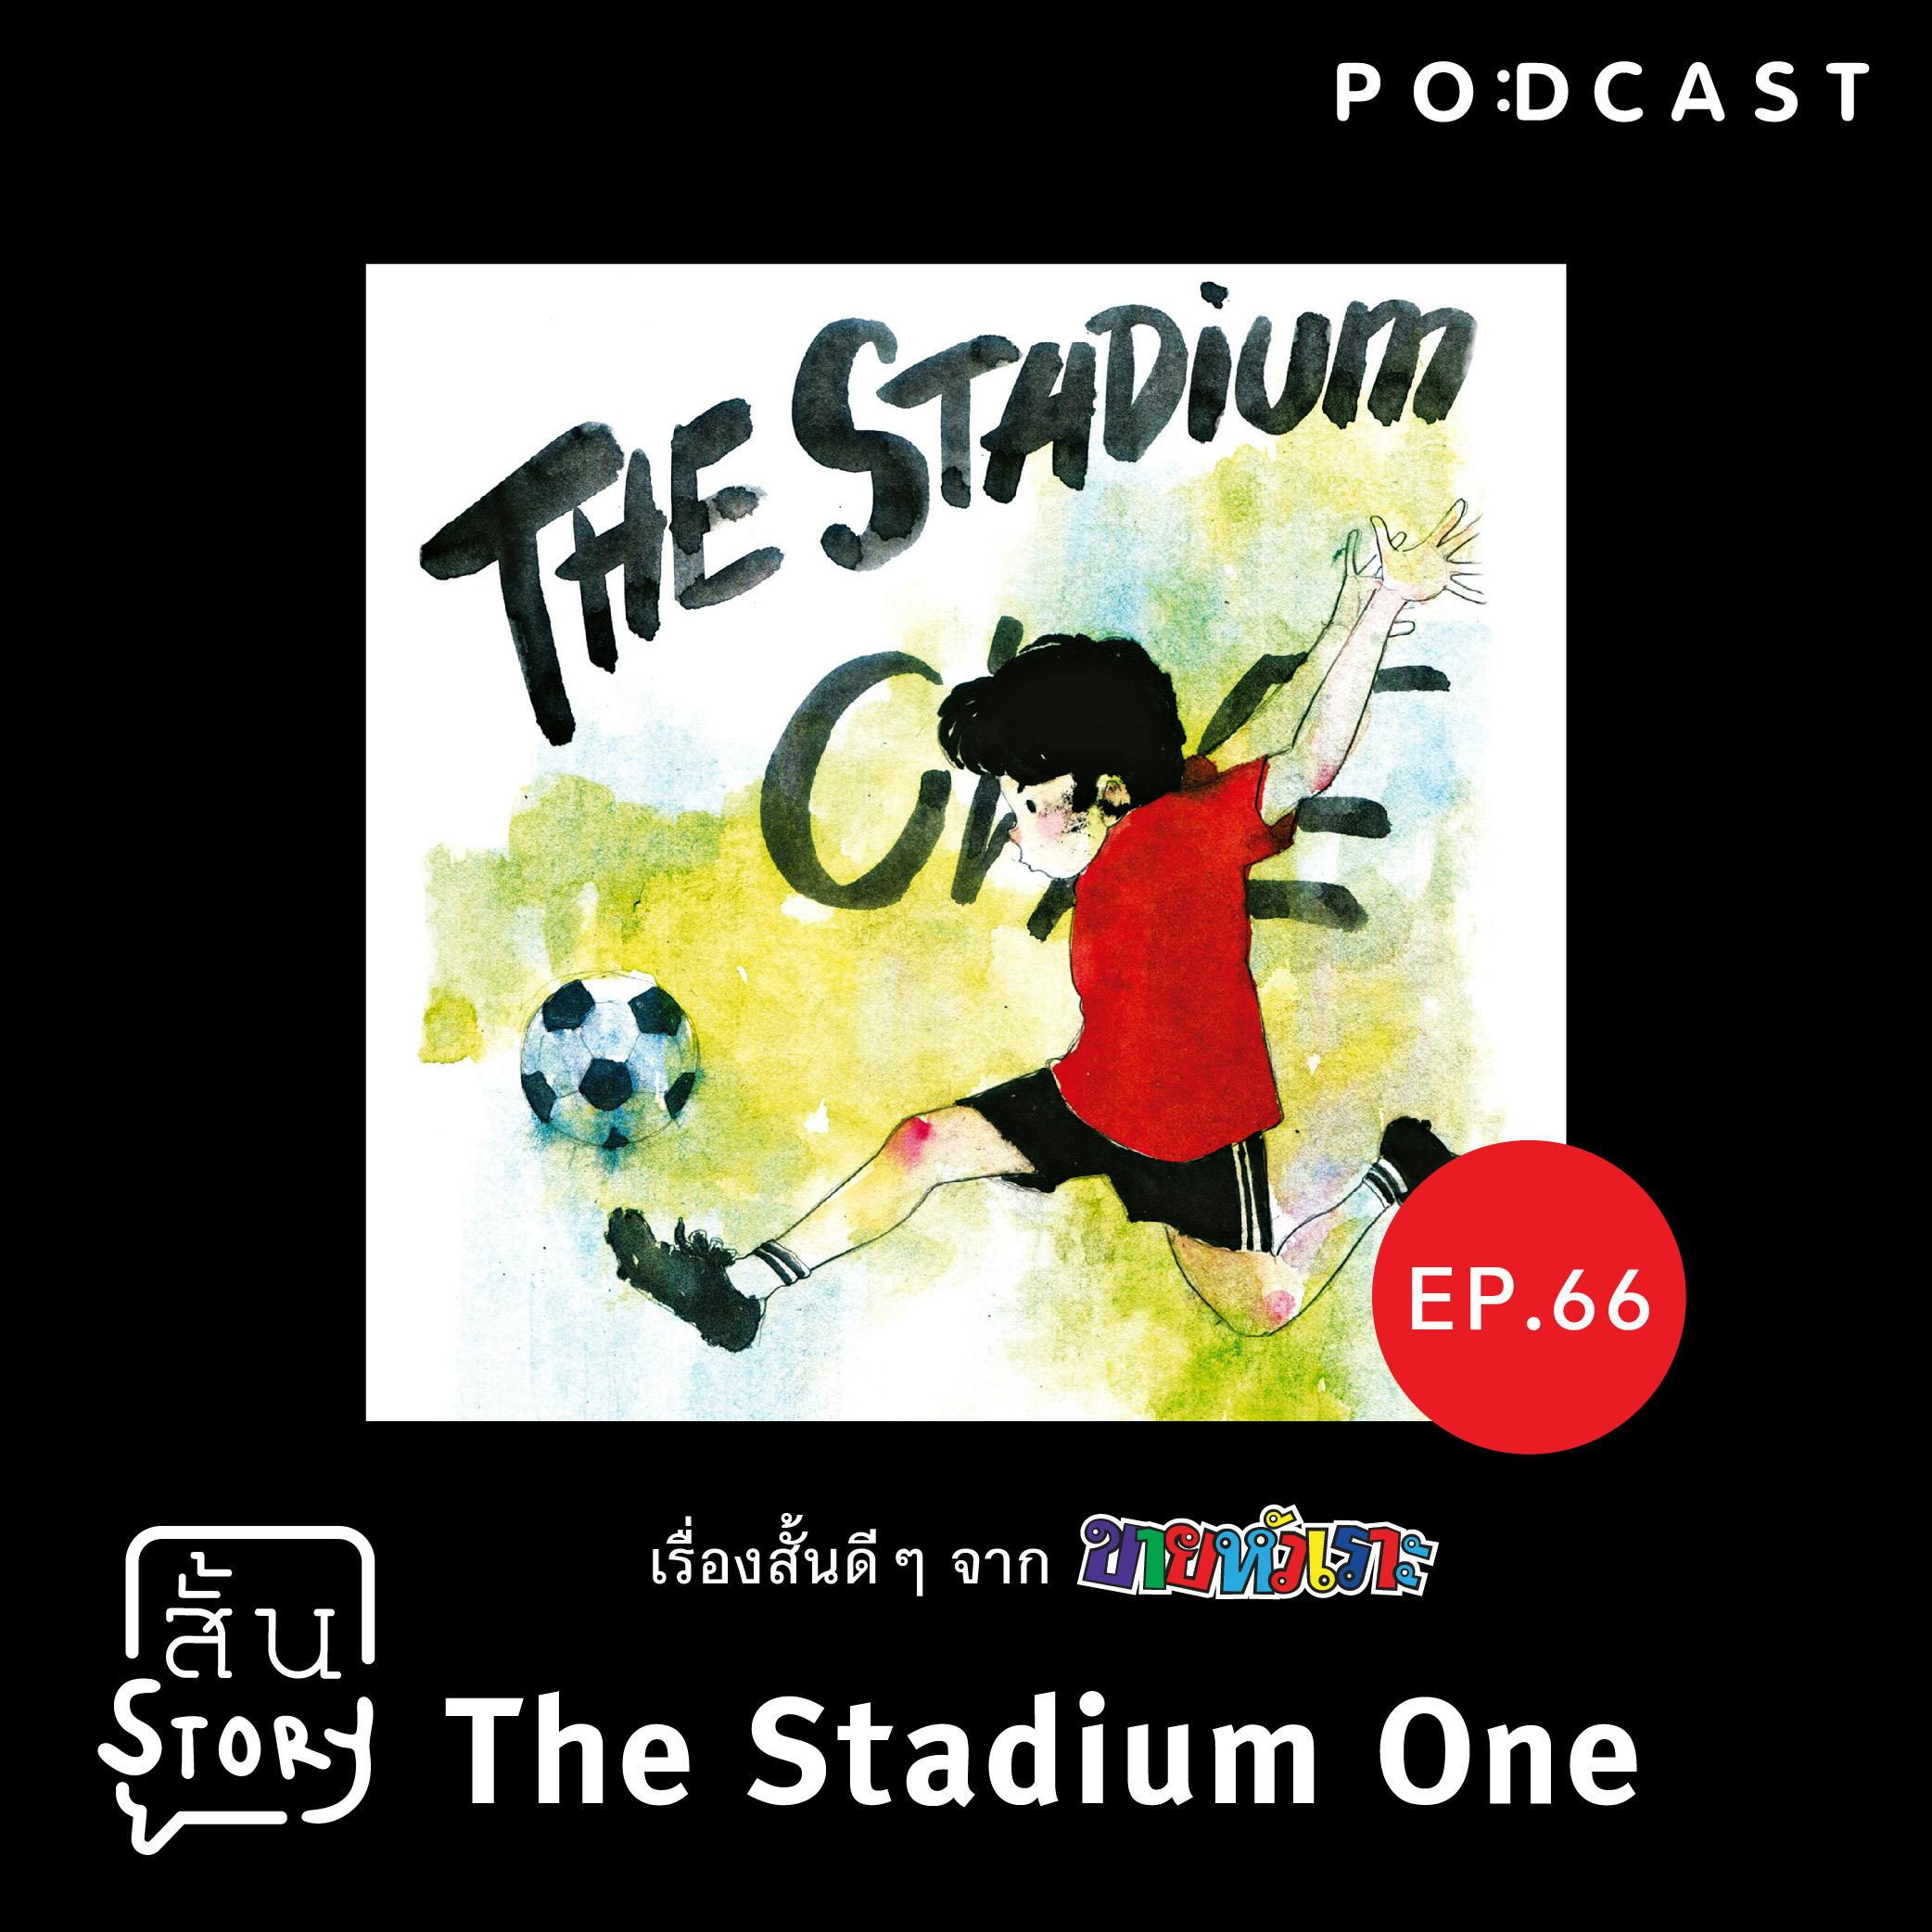 EP. 66 เรื่องสั้นขายหัวเราะ: The Stadium One